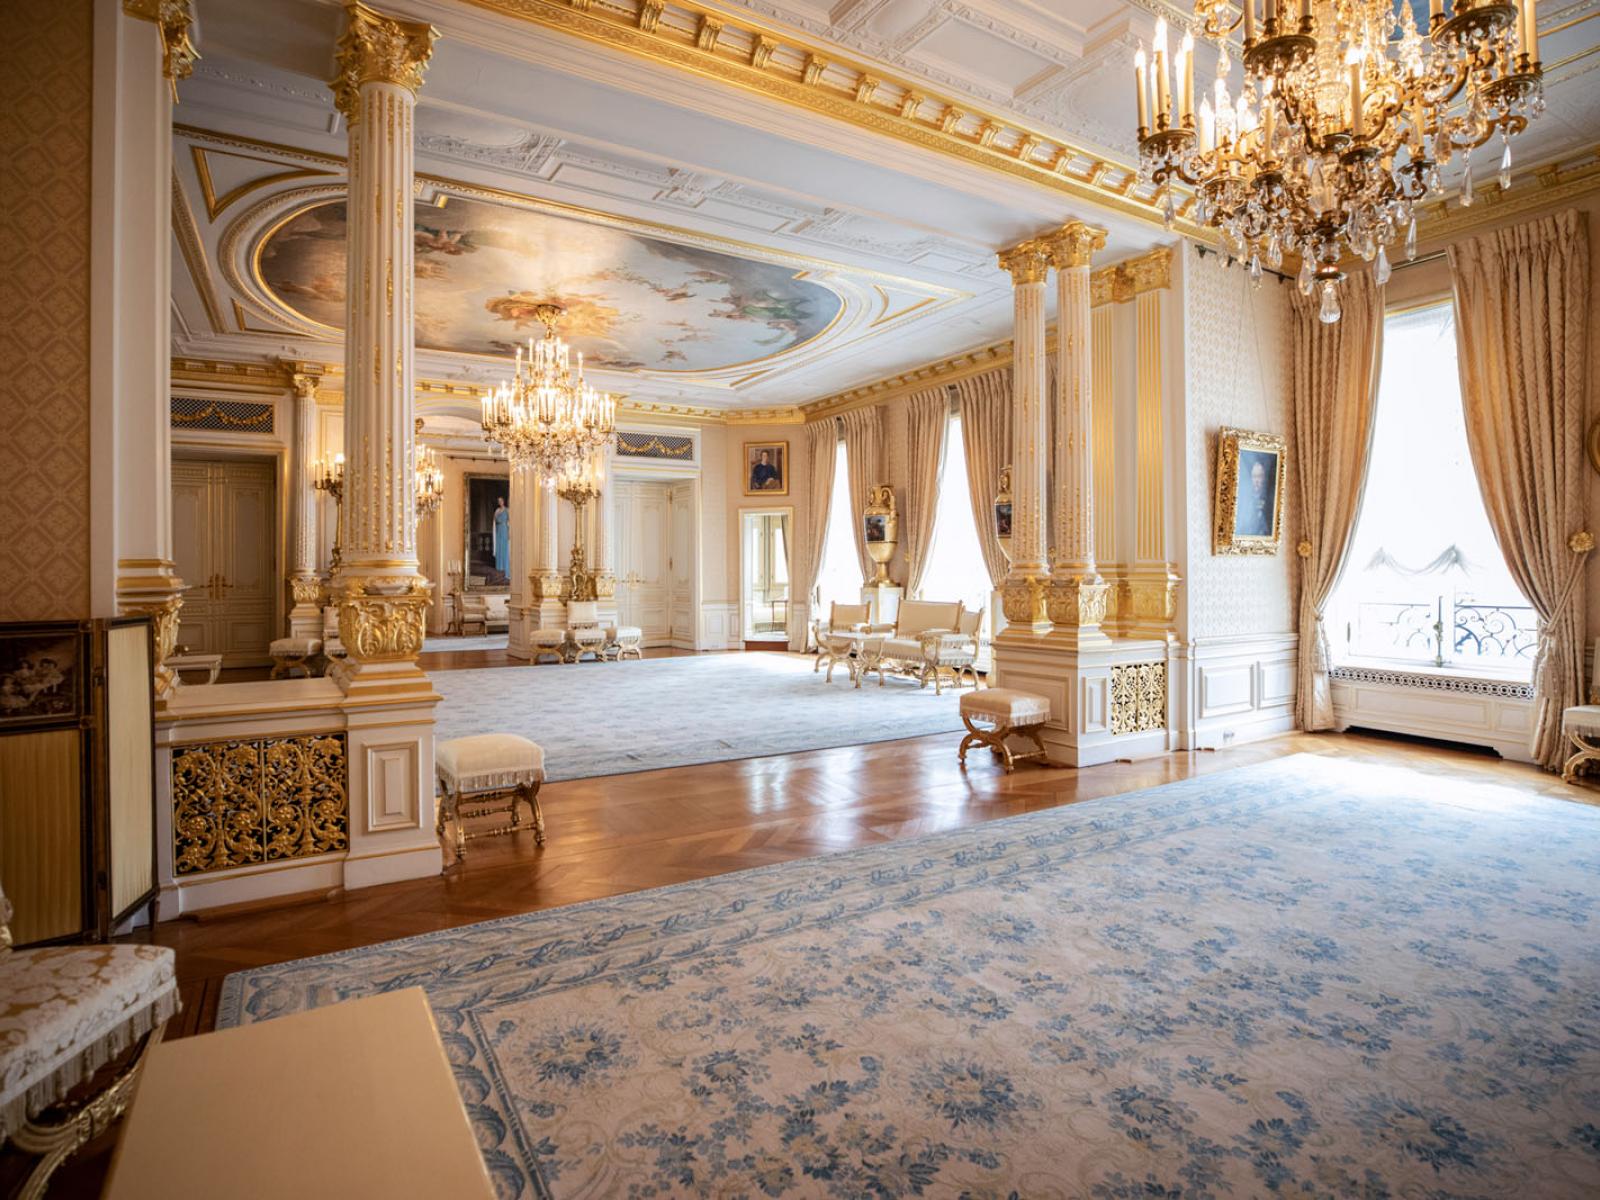 The salle des fêtes (ballroom) of the Palais grand-ducal